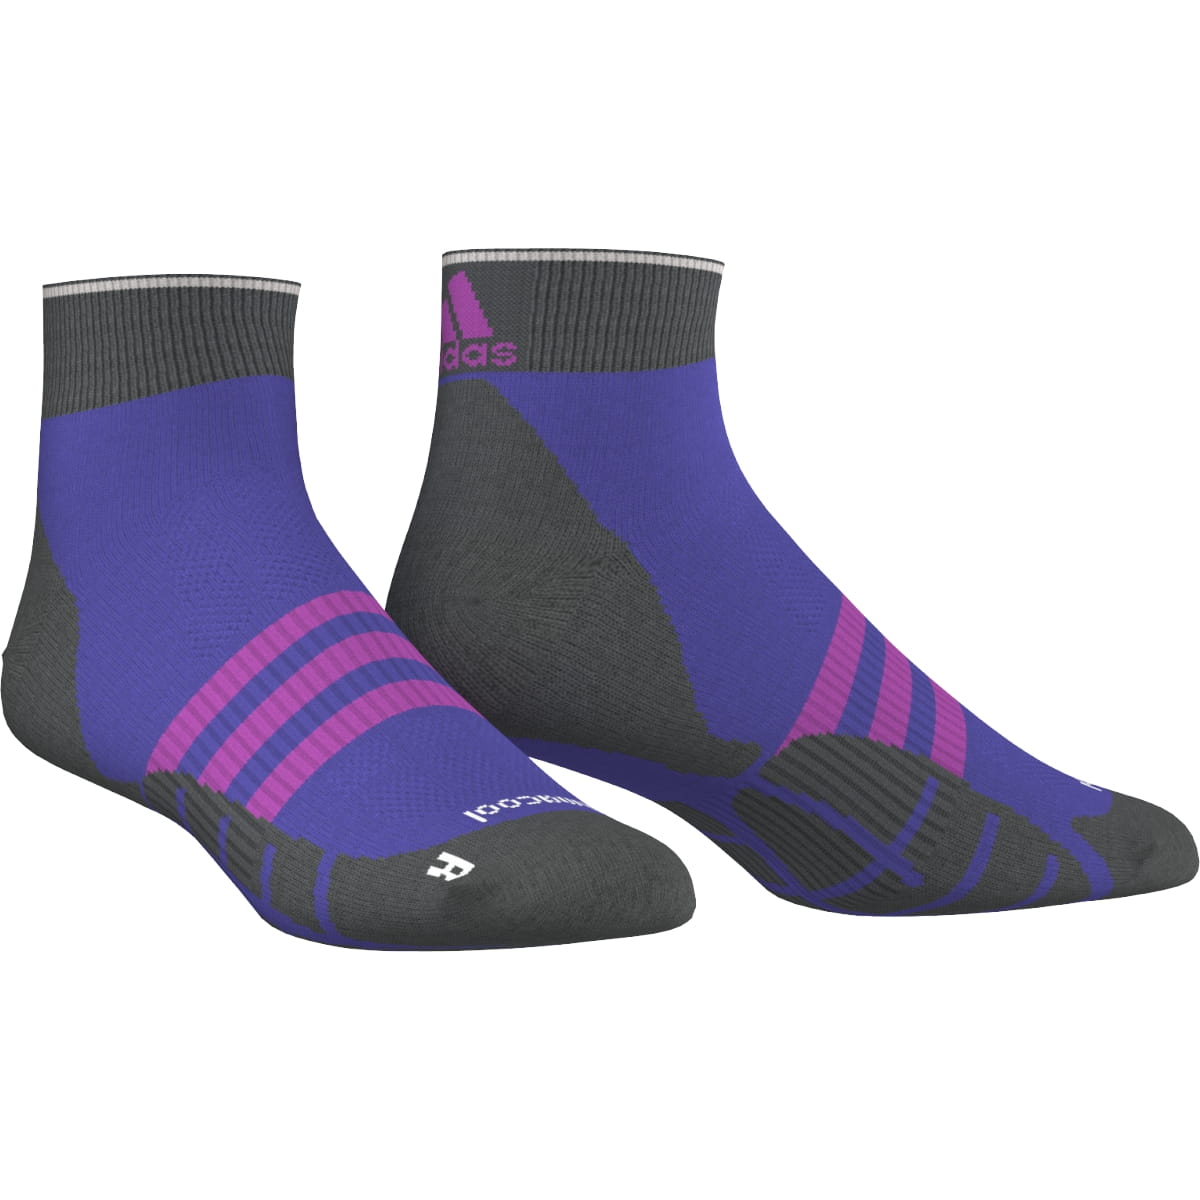 Ponožky adidas run thin-cushioned id ankle socks, 1 pair